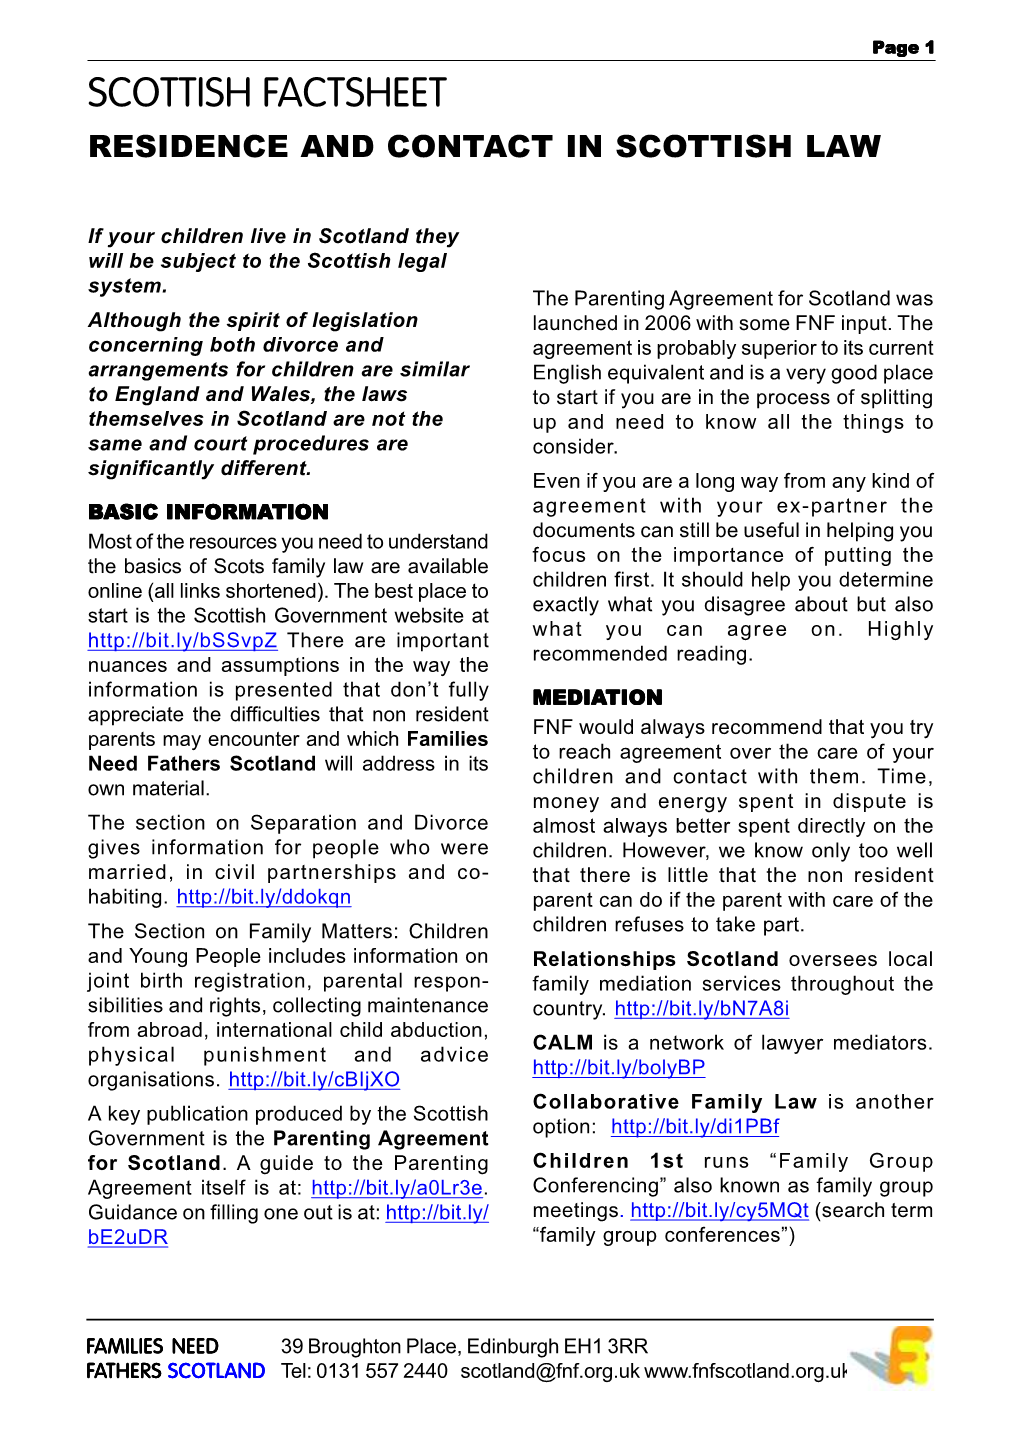 Residence and Contact Factsheet May 2011.P65